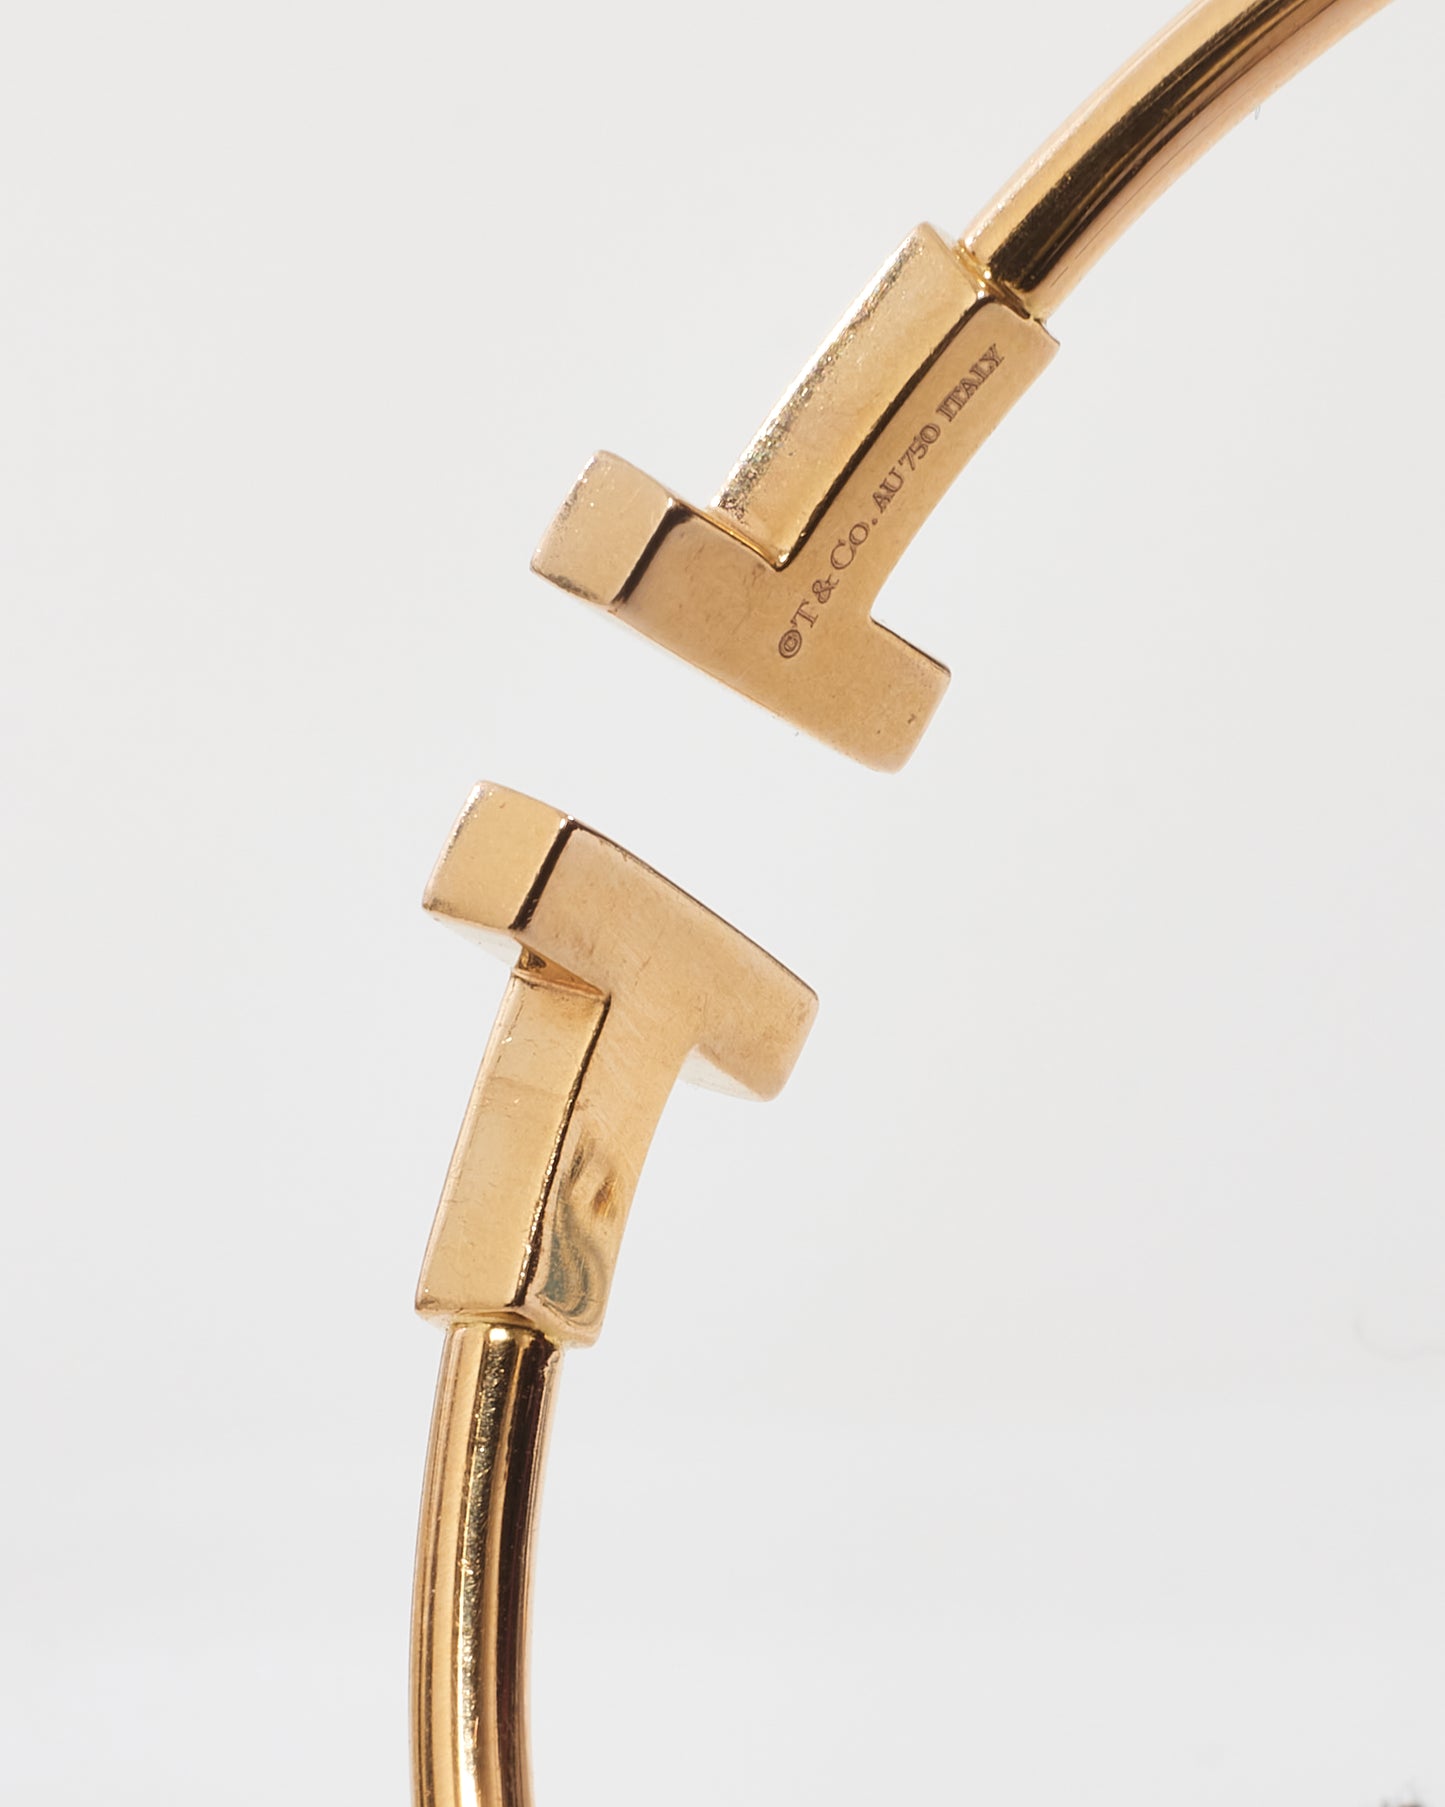 Tiffany & Co. 18K Rose Gold Tiffany T Wire Bracelet With Diamonds